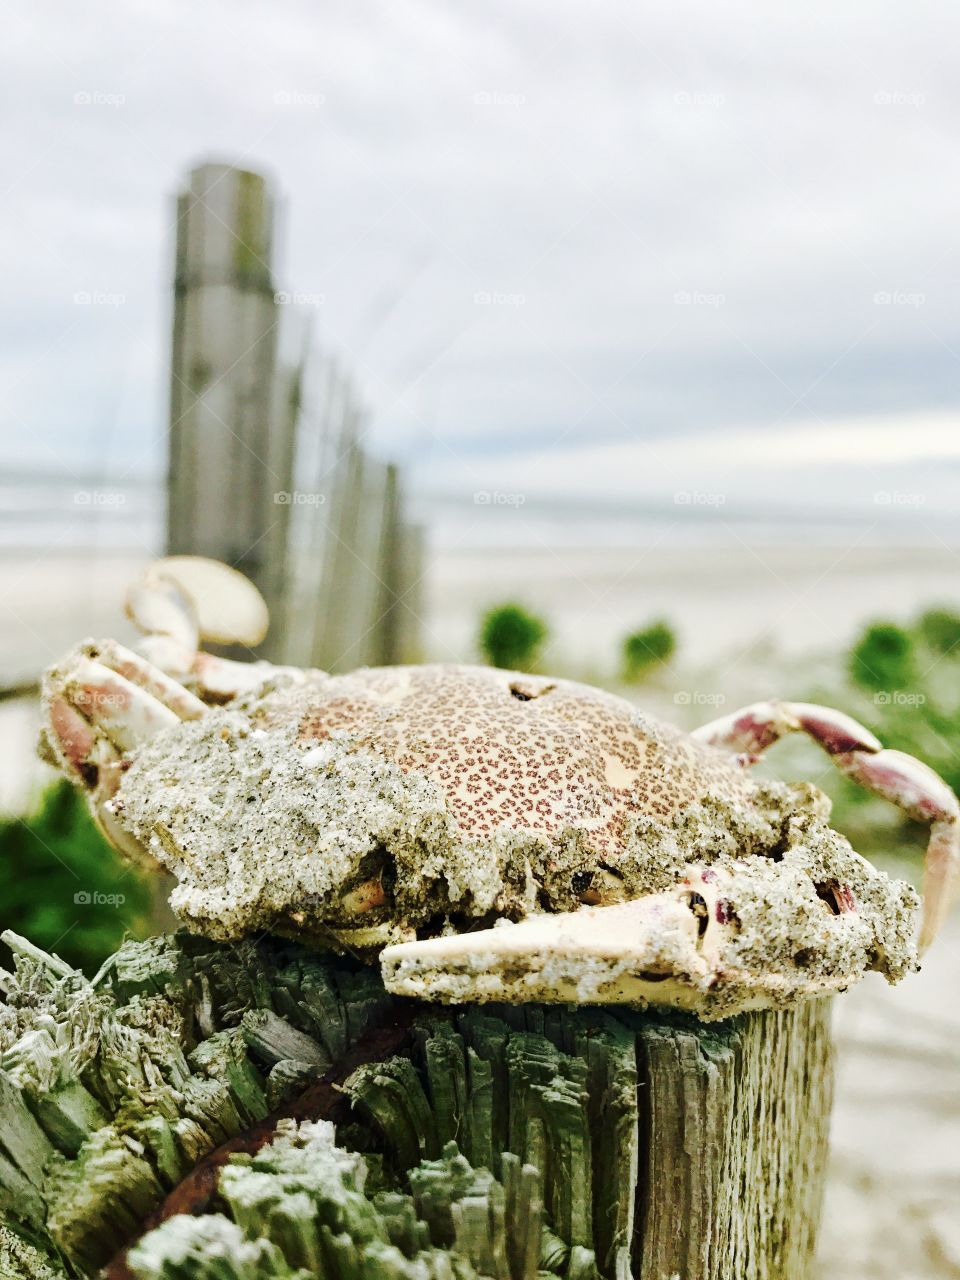 Crab at the beach